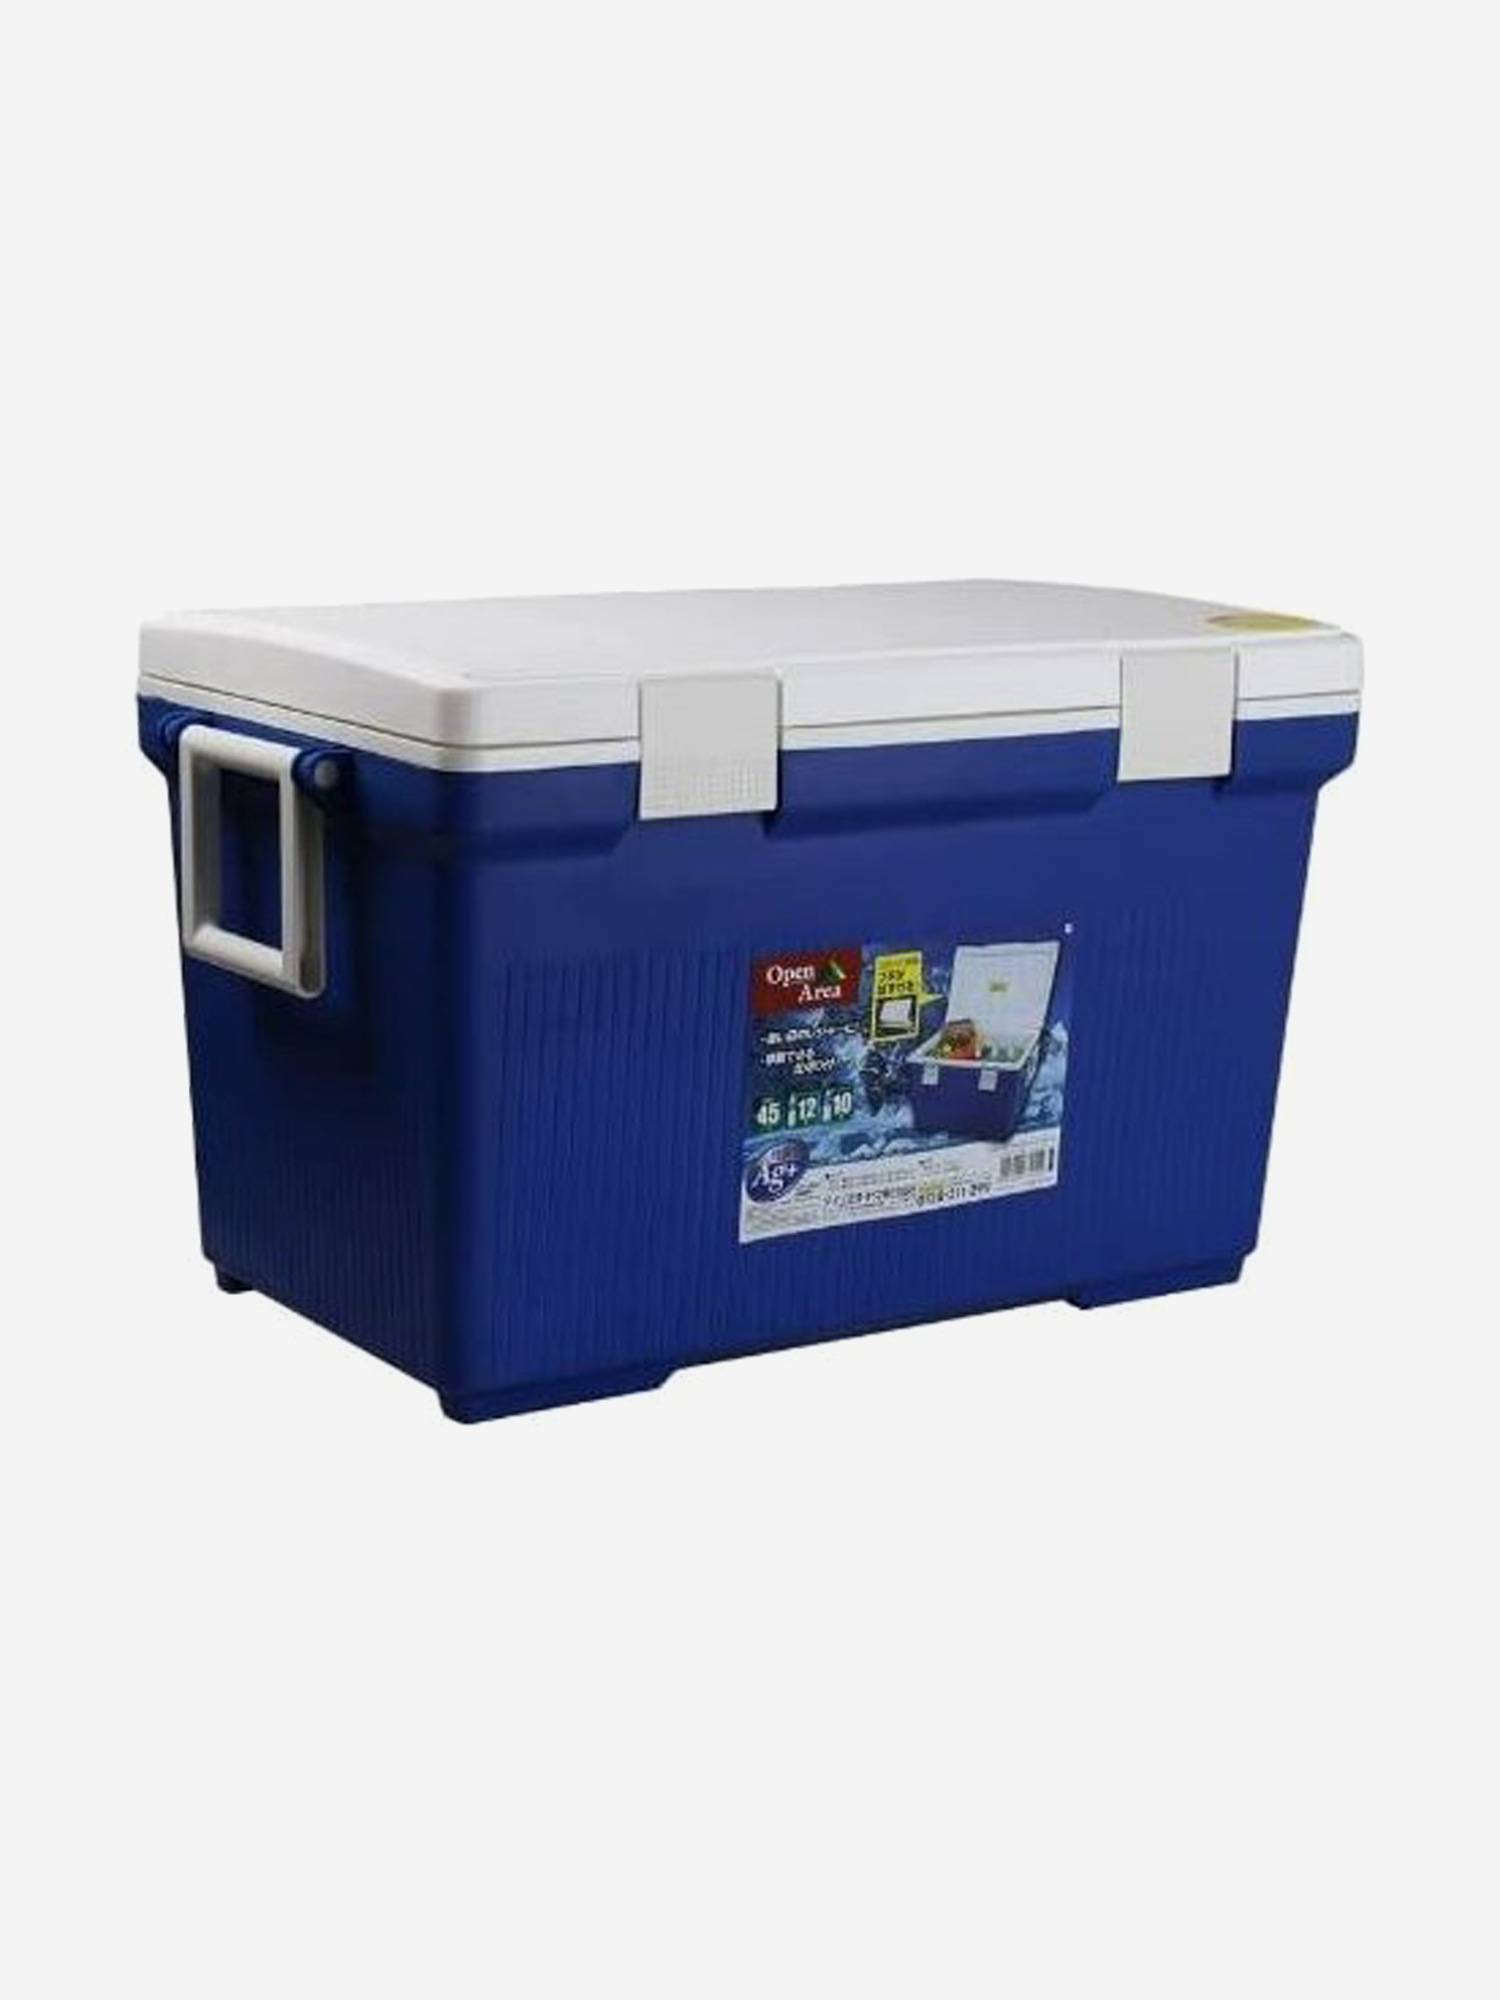 Термобокс IRIS OHYAMA Cooler Box CL-45, 45 литров, синий/белый, Синий термобокс iris ohyama hugel vacuum cooler box tc 40 белый 40 литров белый